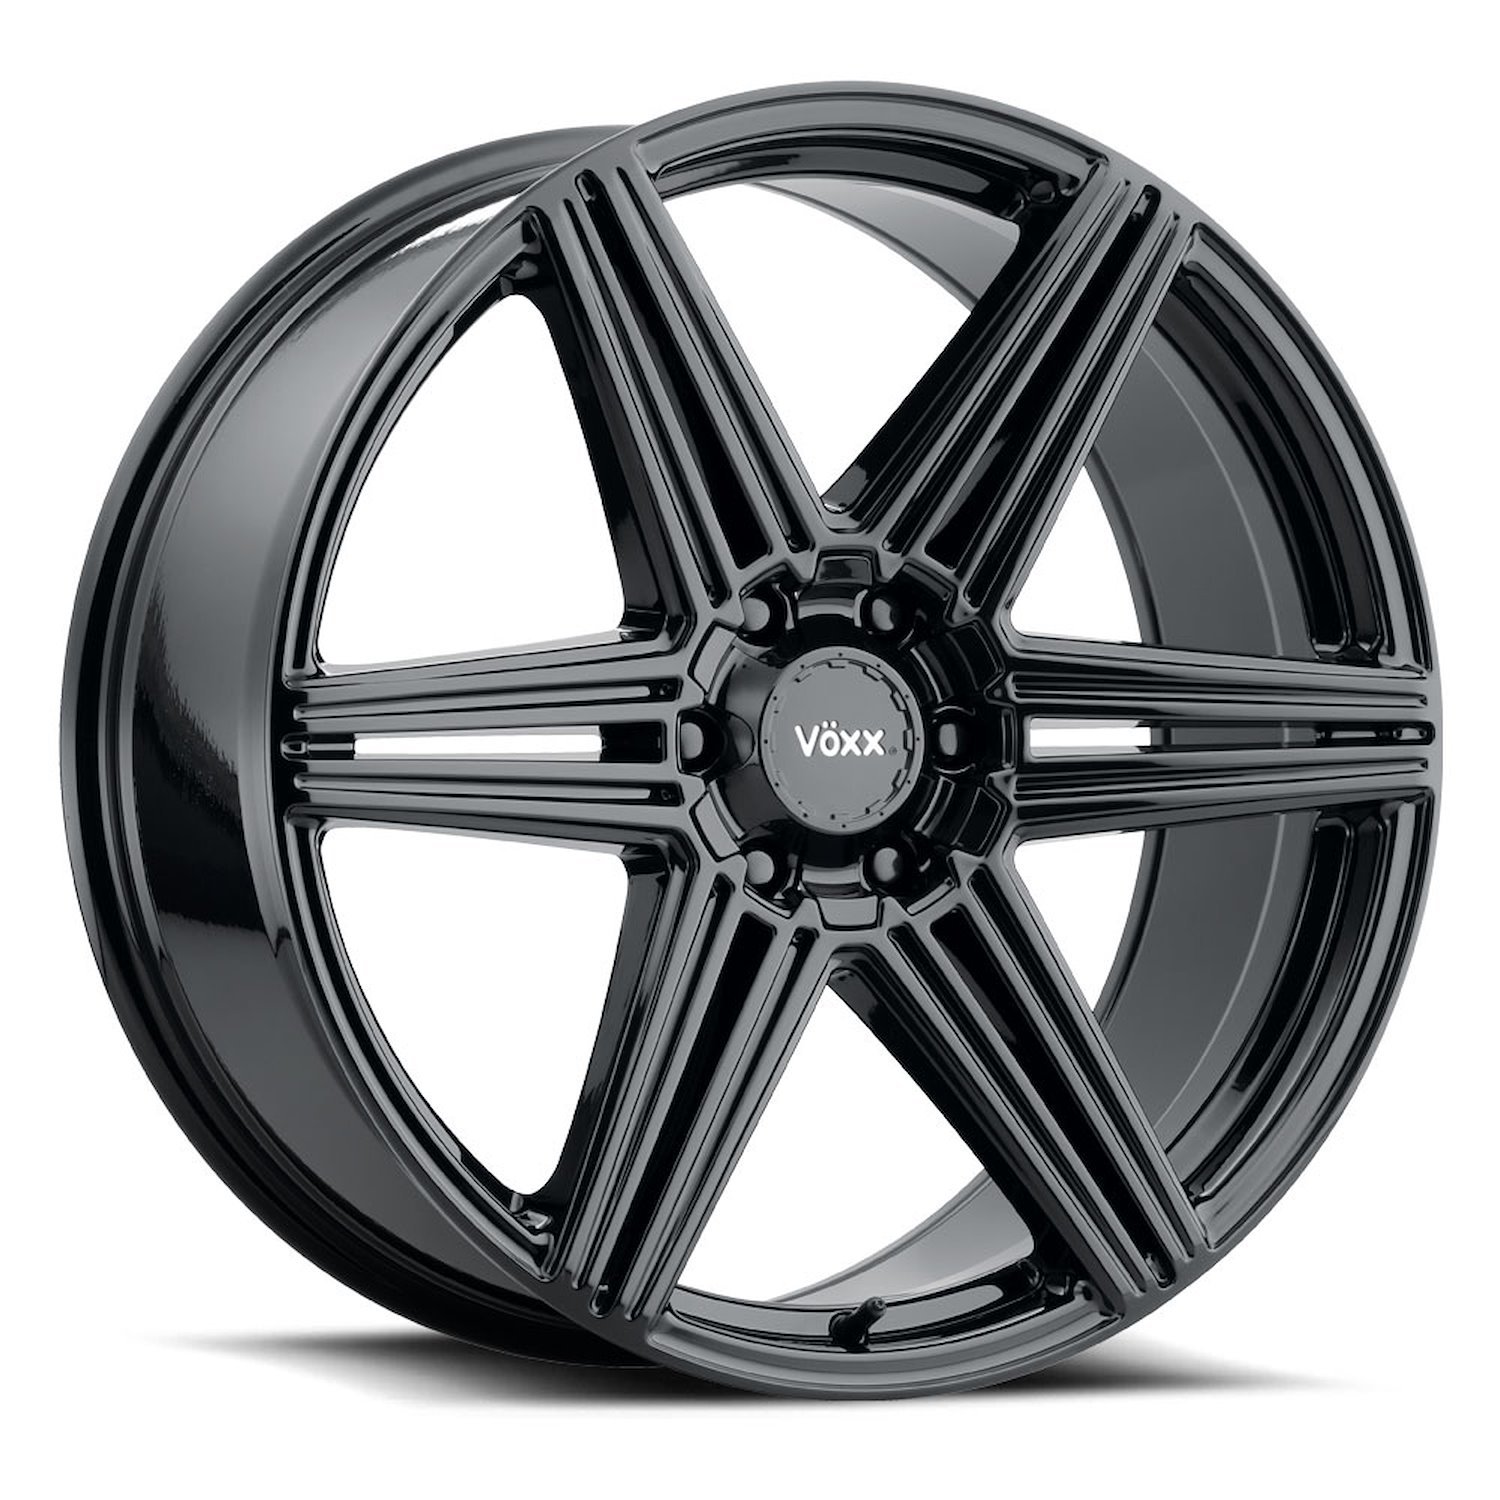 SOT 285-6002-39 GB Sotto Wheel [Size: 20" x 8.50"] Finish: Gloss Black